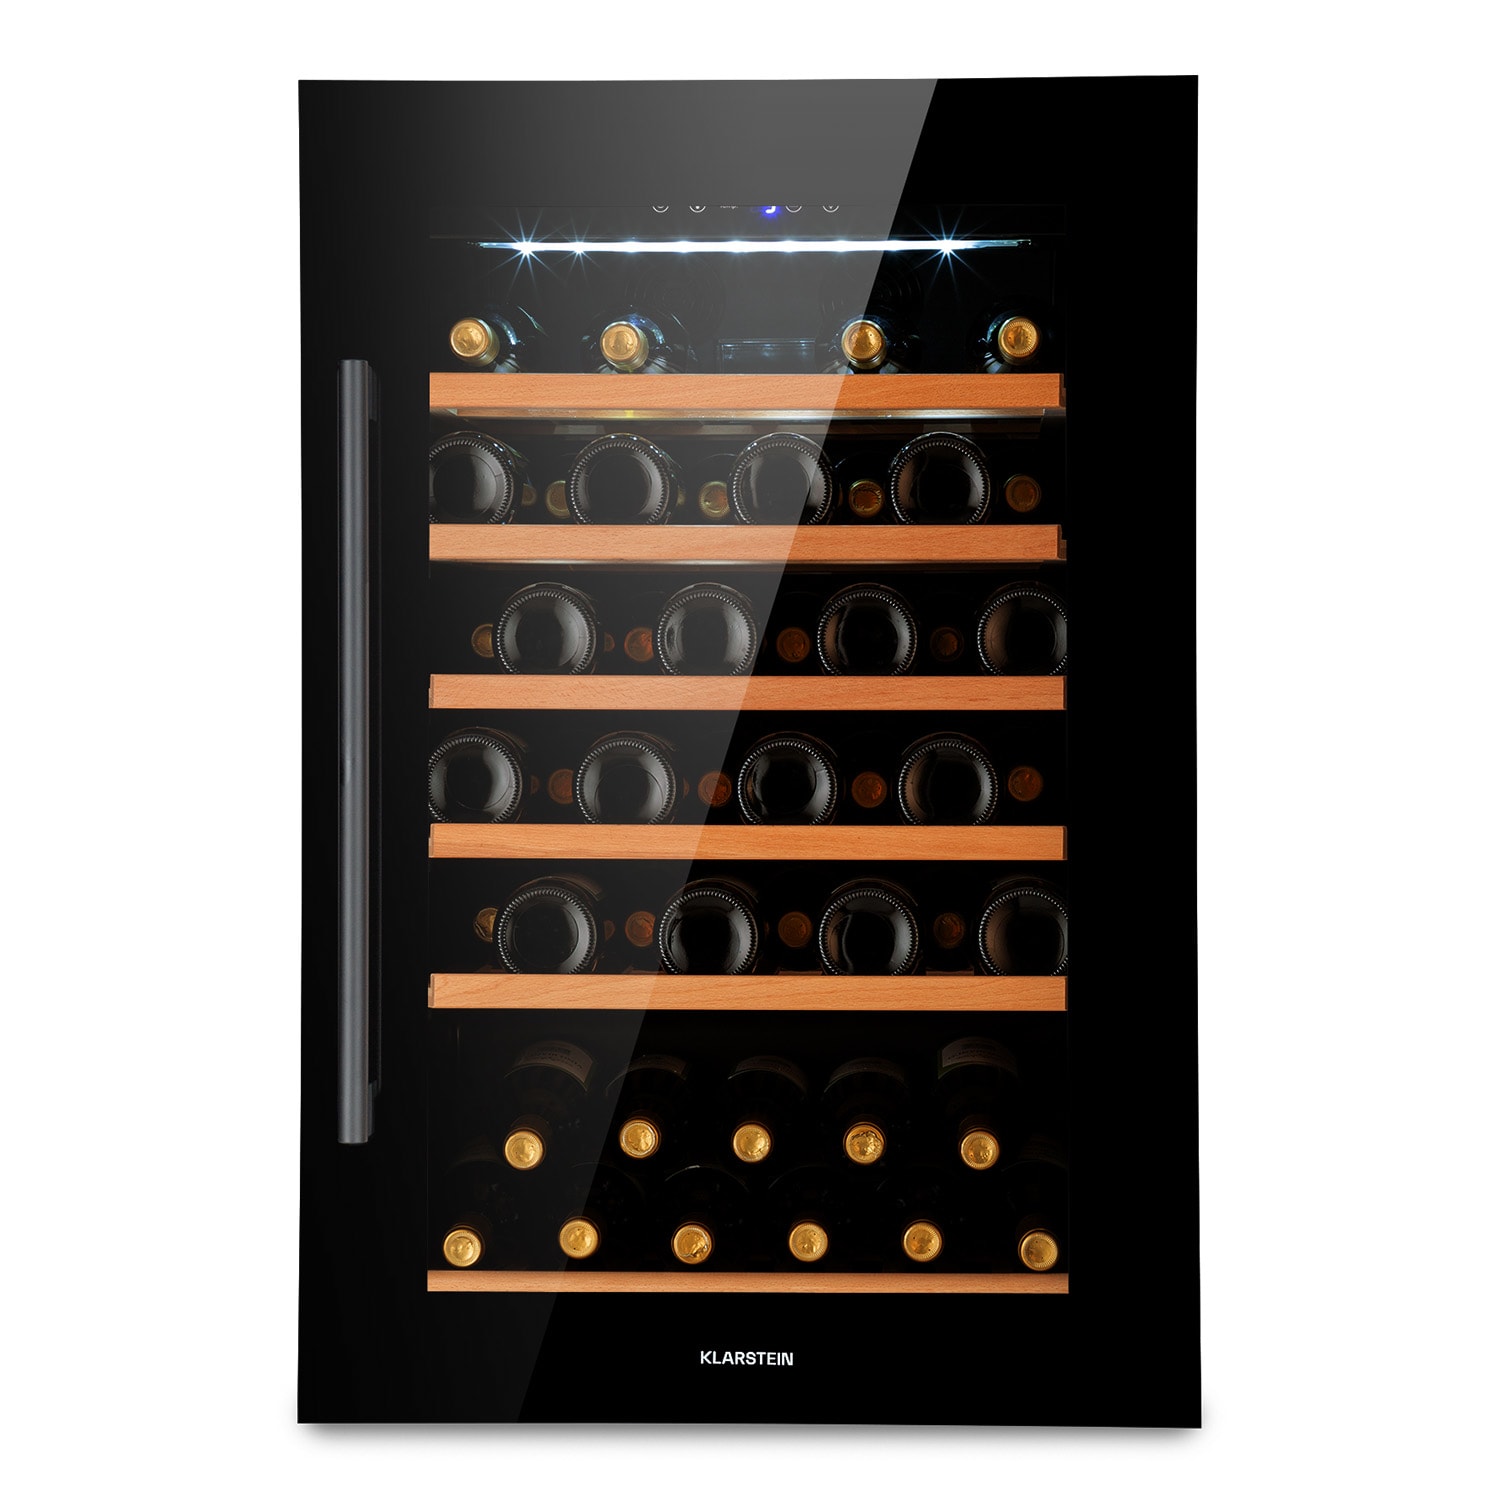 Klarstein Vinsider 52 Built-In Uno, frigider pentru vin încorporat, 52 sticle, 137 litri, oțel inoxidabil